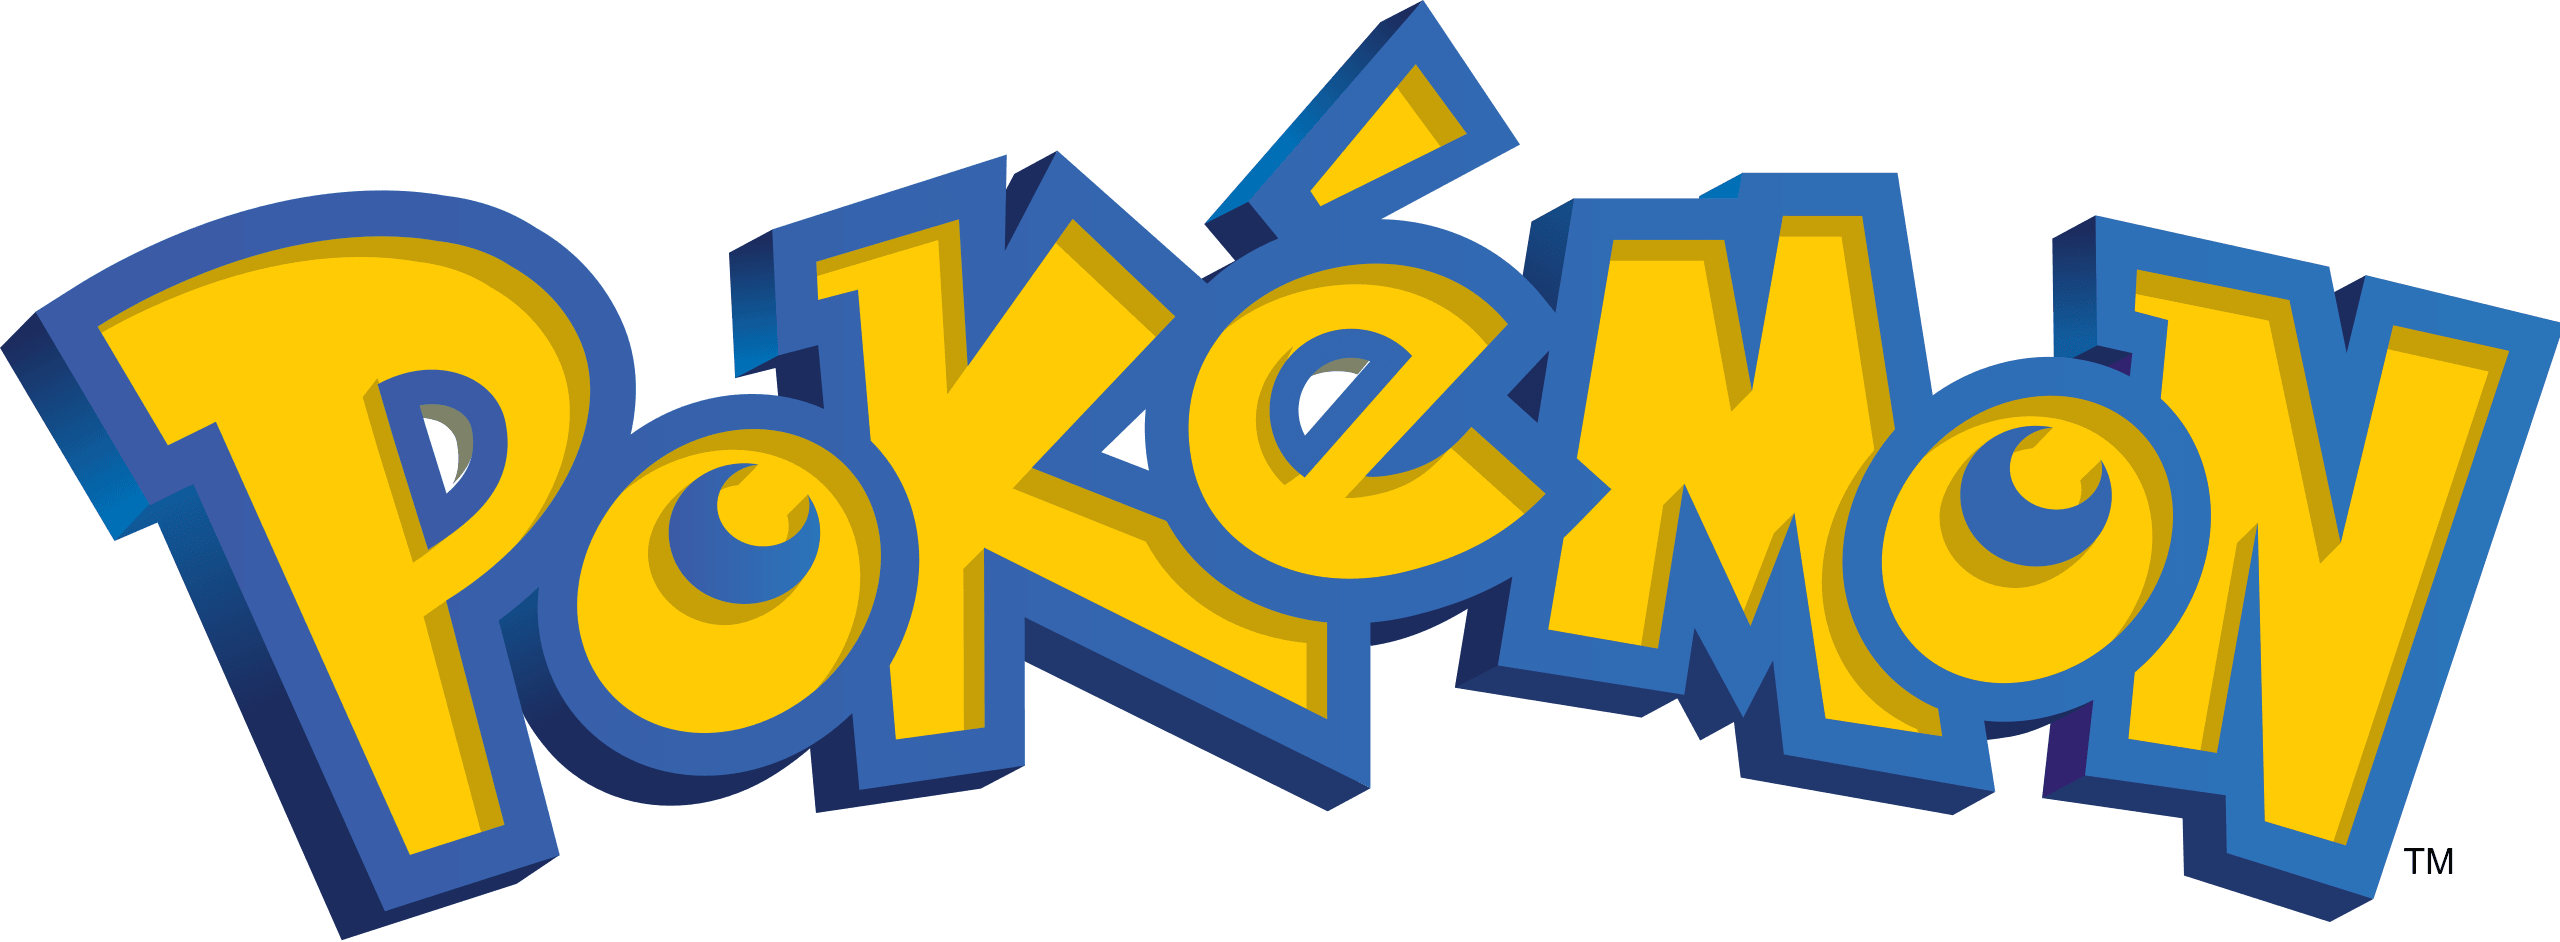 Nanoblock - Pokemon - Eevee - Hobby Champion Inc